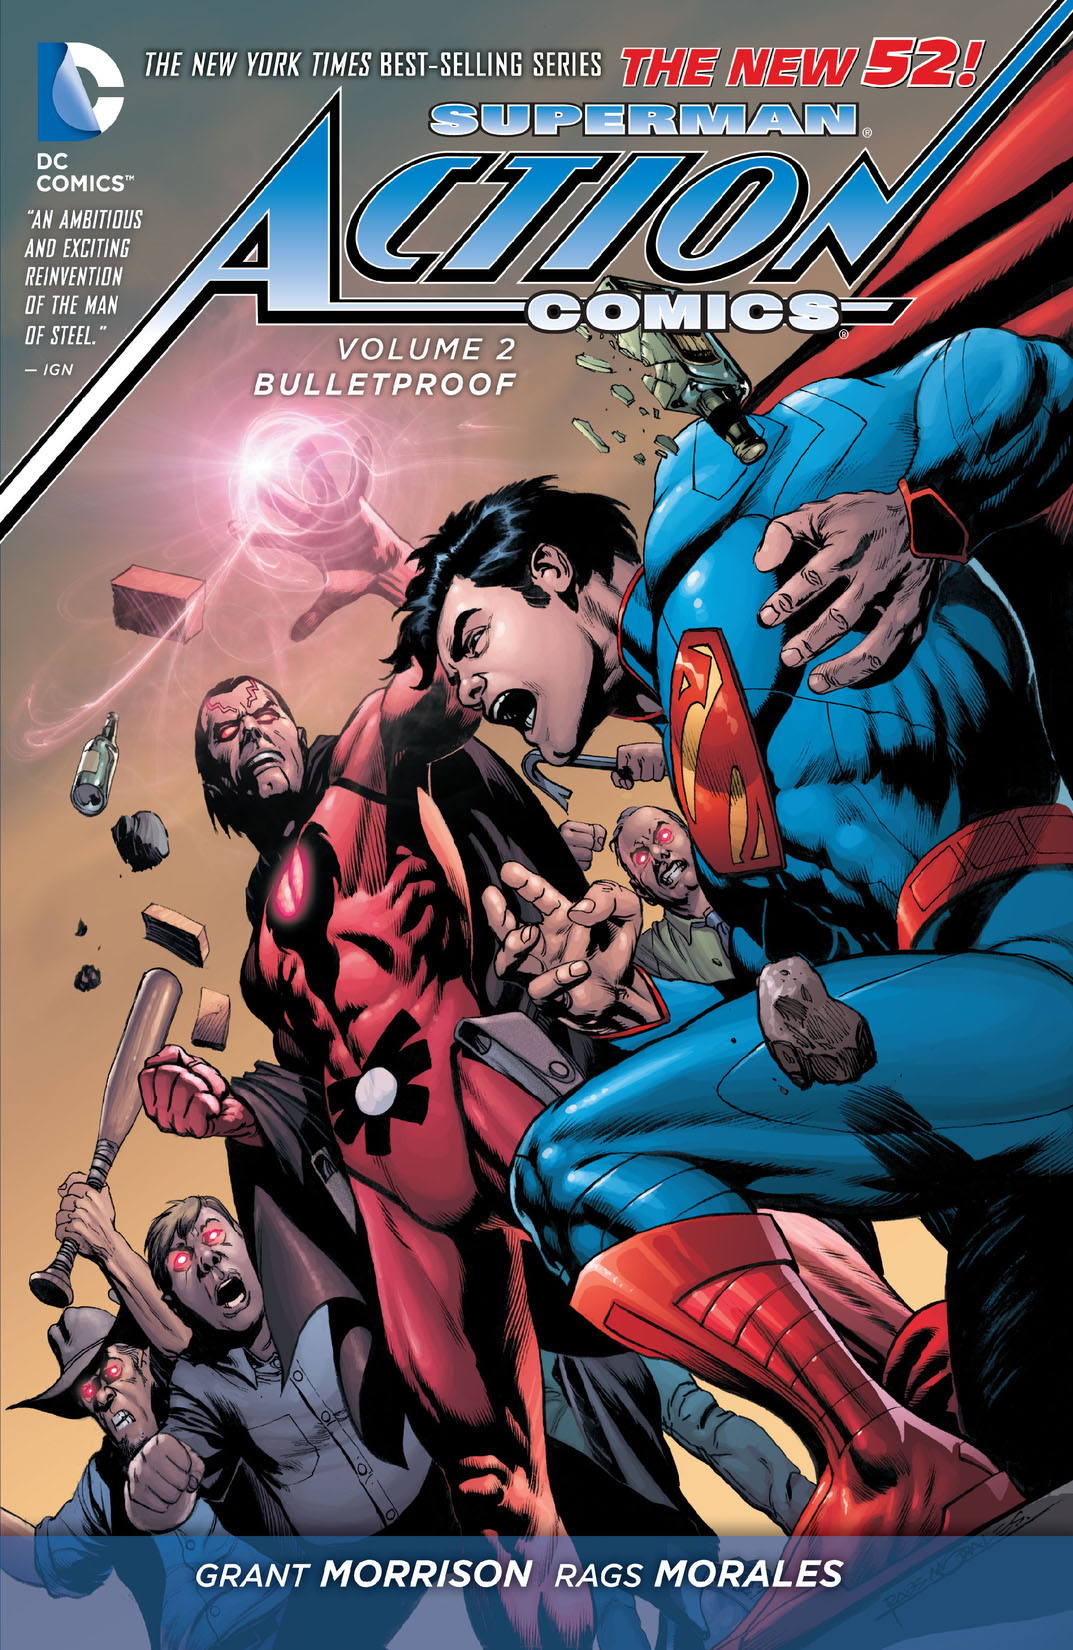 Superman - Action Comics Vol. 2: Bulletproof preview images